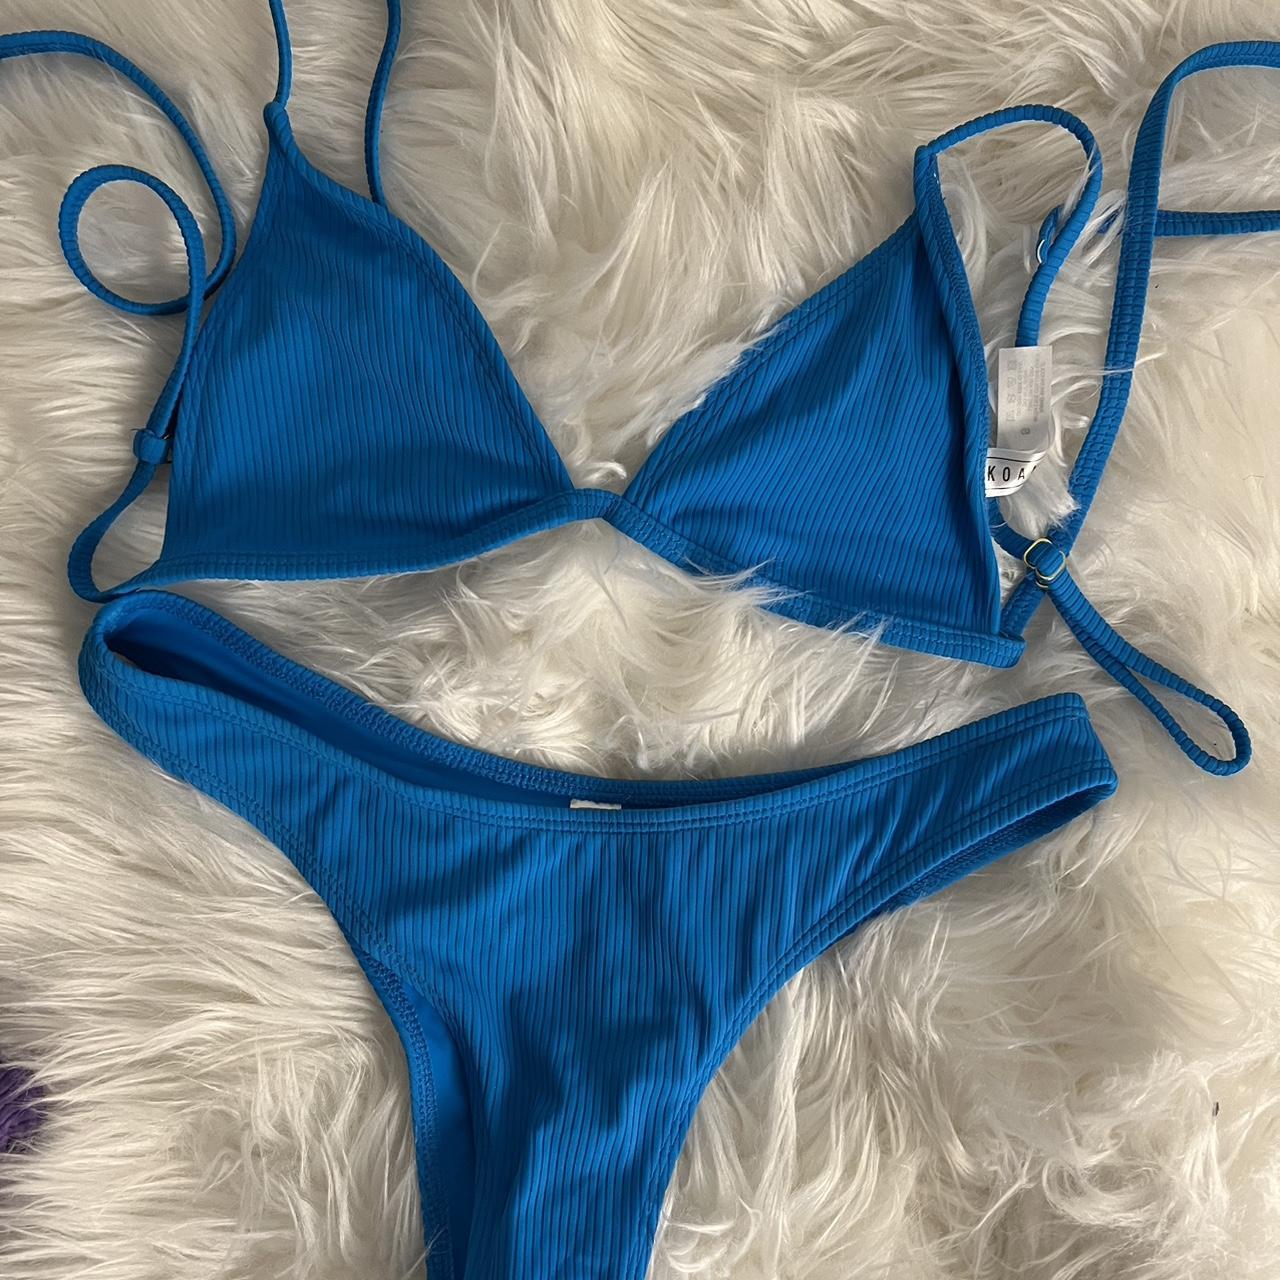 Koana Swim size small blue bikini set - Depop